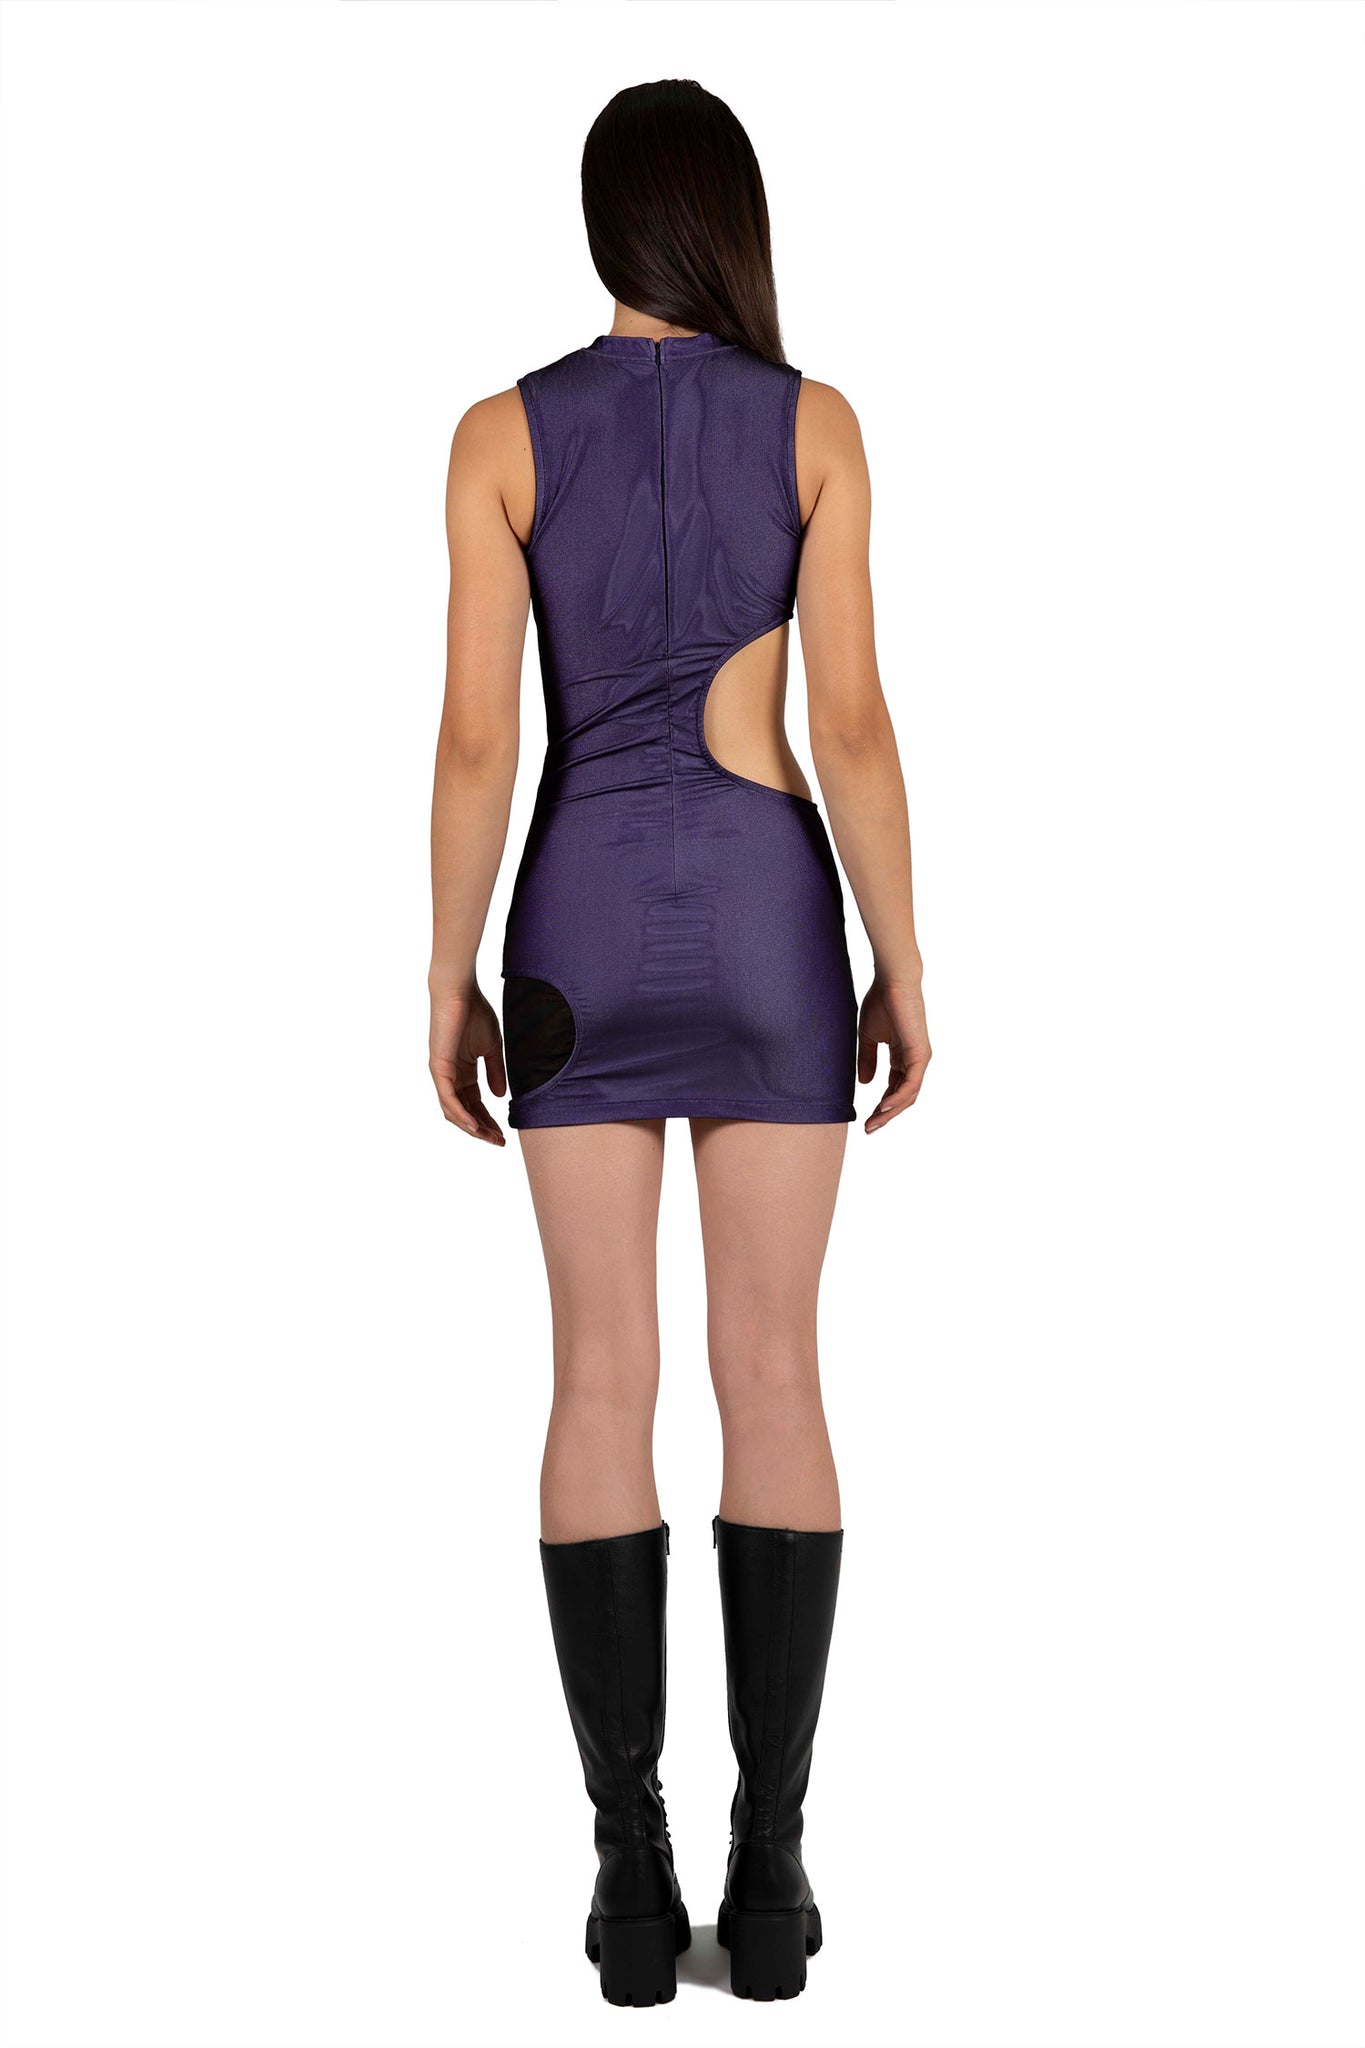 Nath Dress Purple